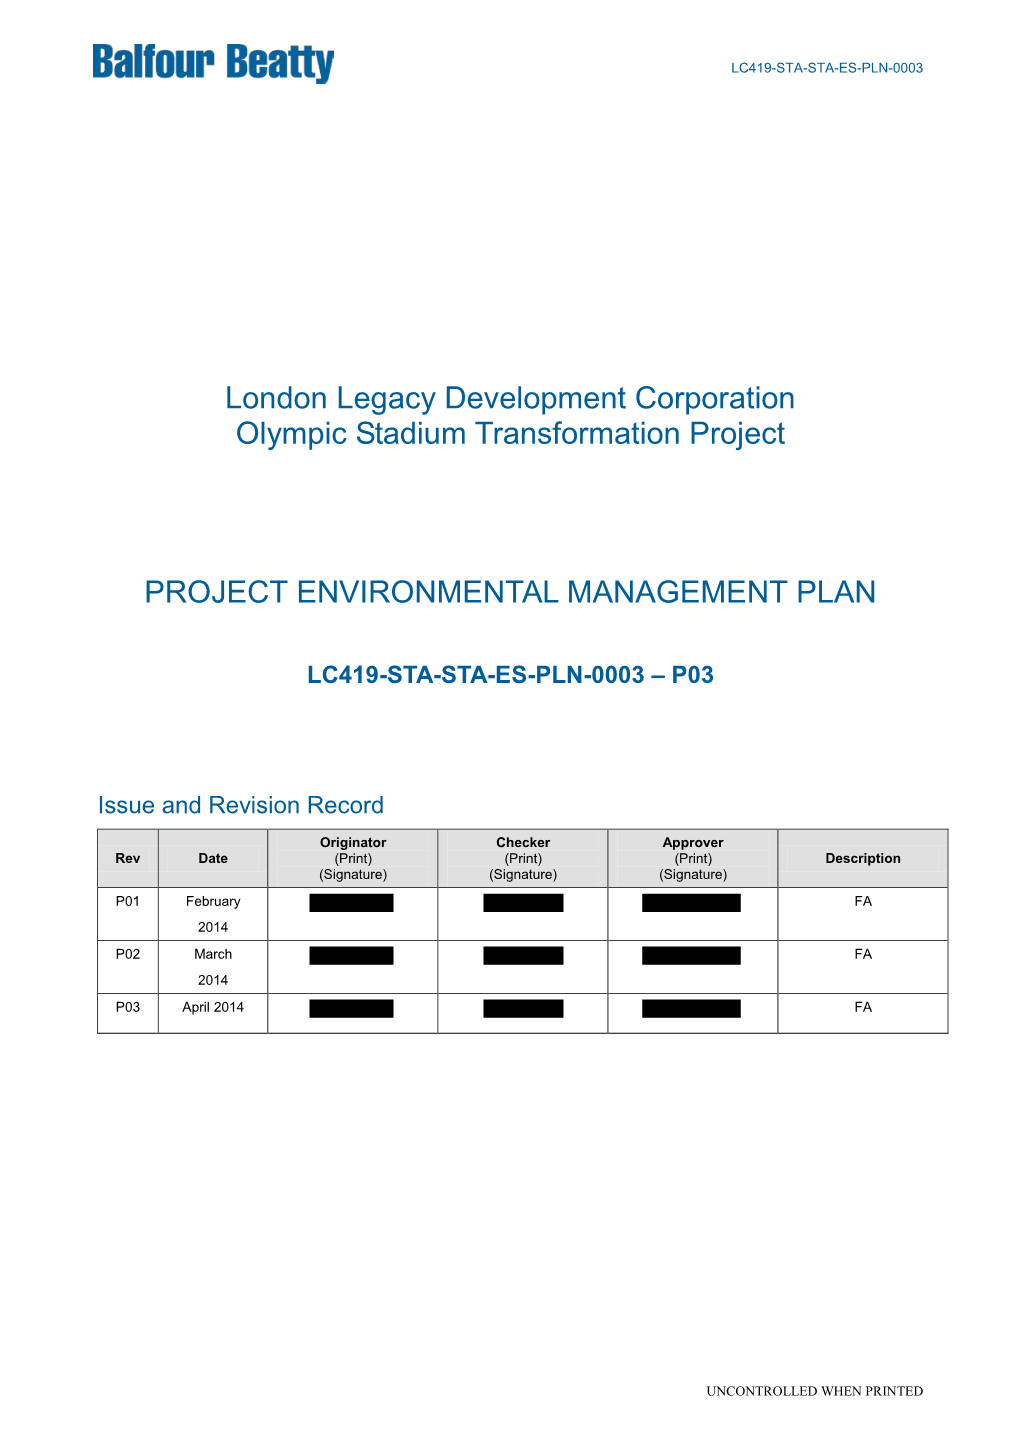 London Legacy Development Corporation Olympic Stadium Transformation Project